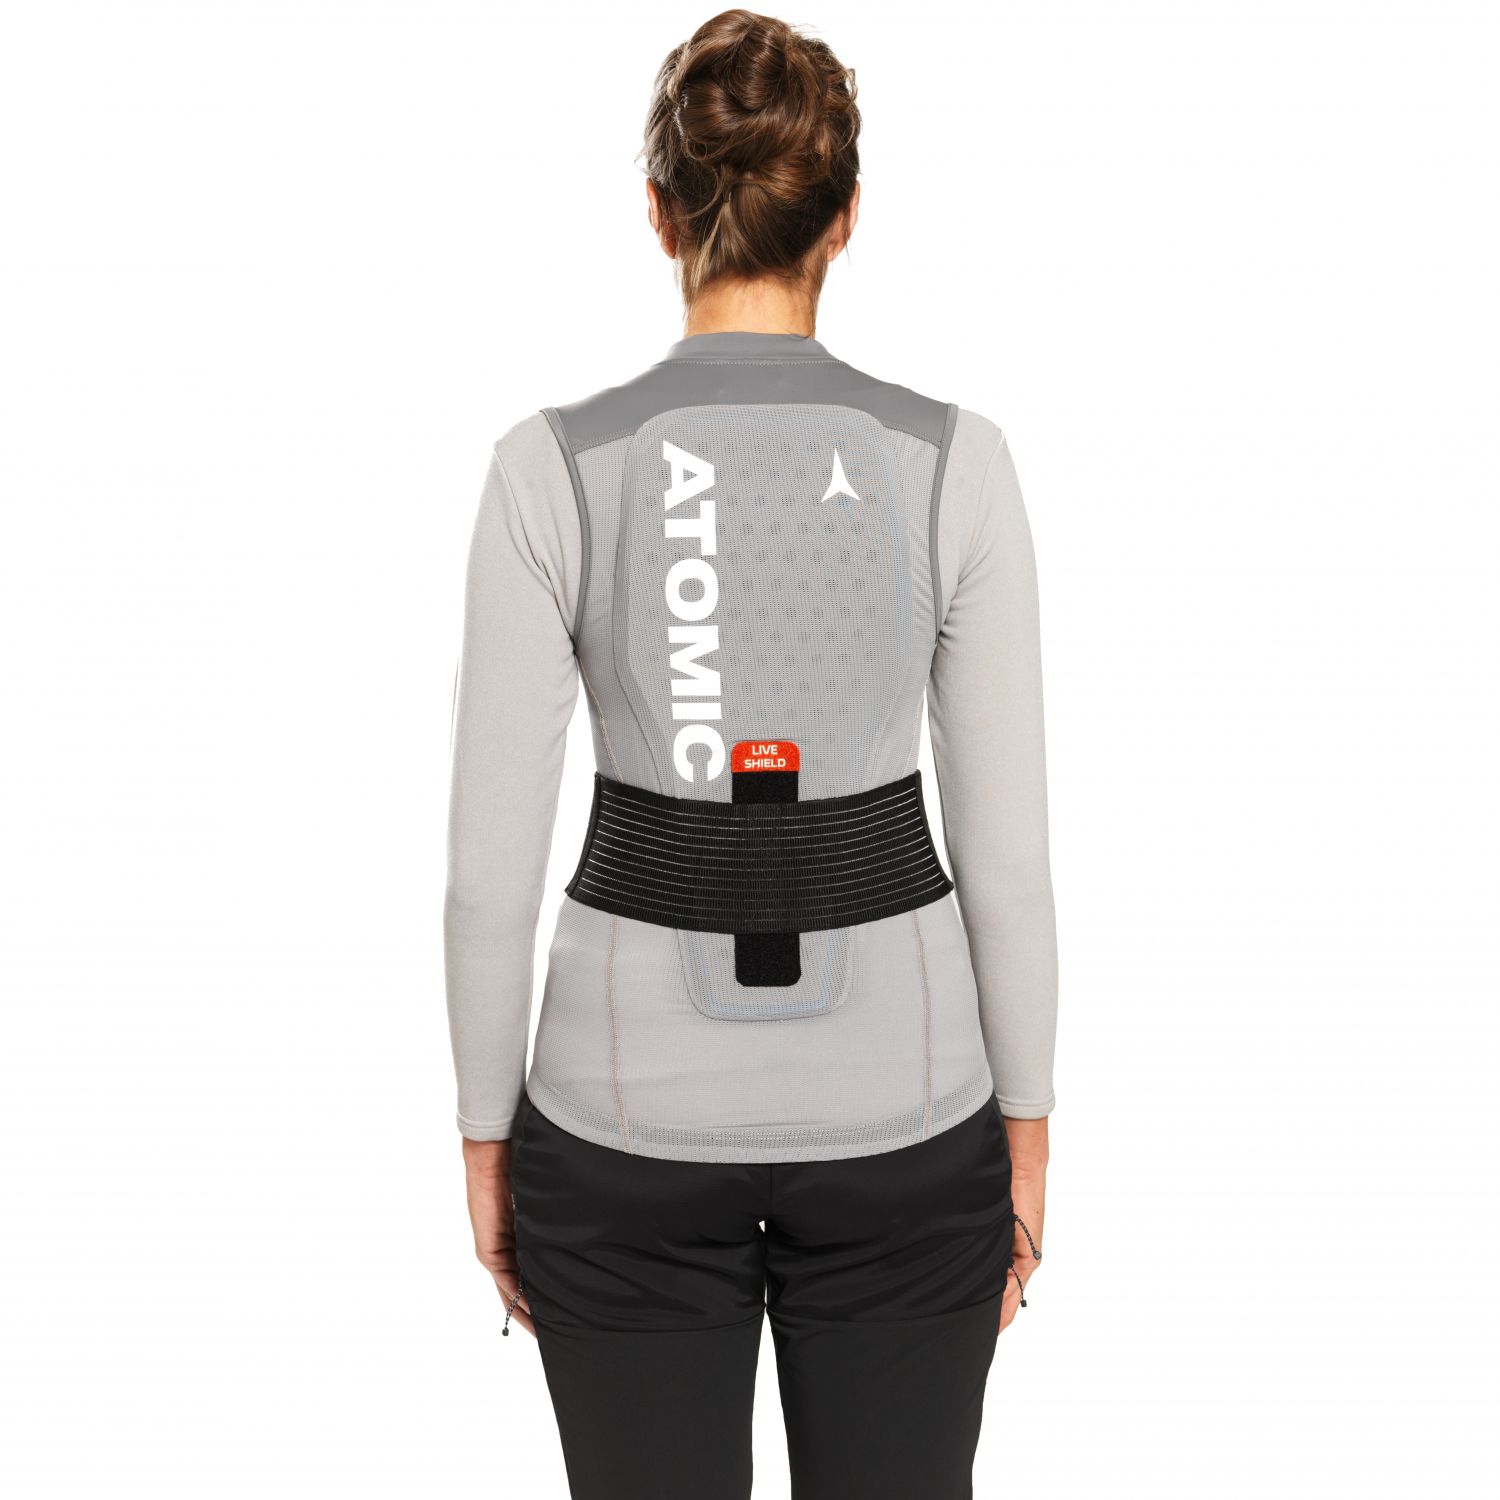 Atomic Live Shield Vest, protège-dos, femme, gris